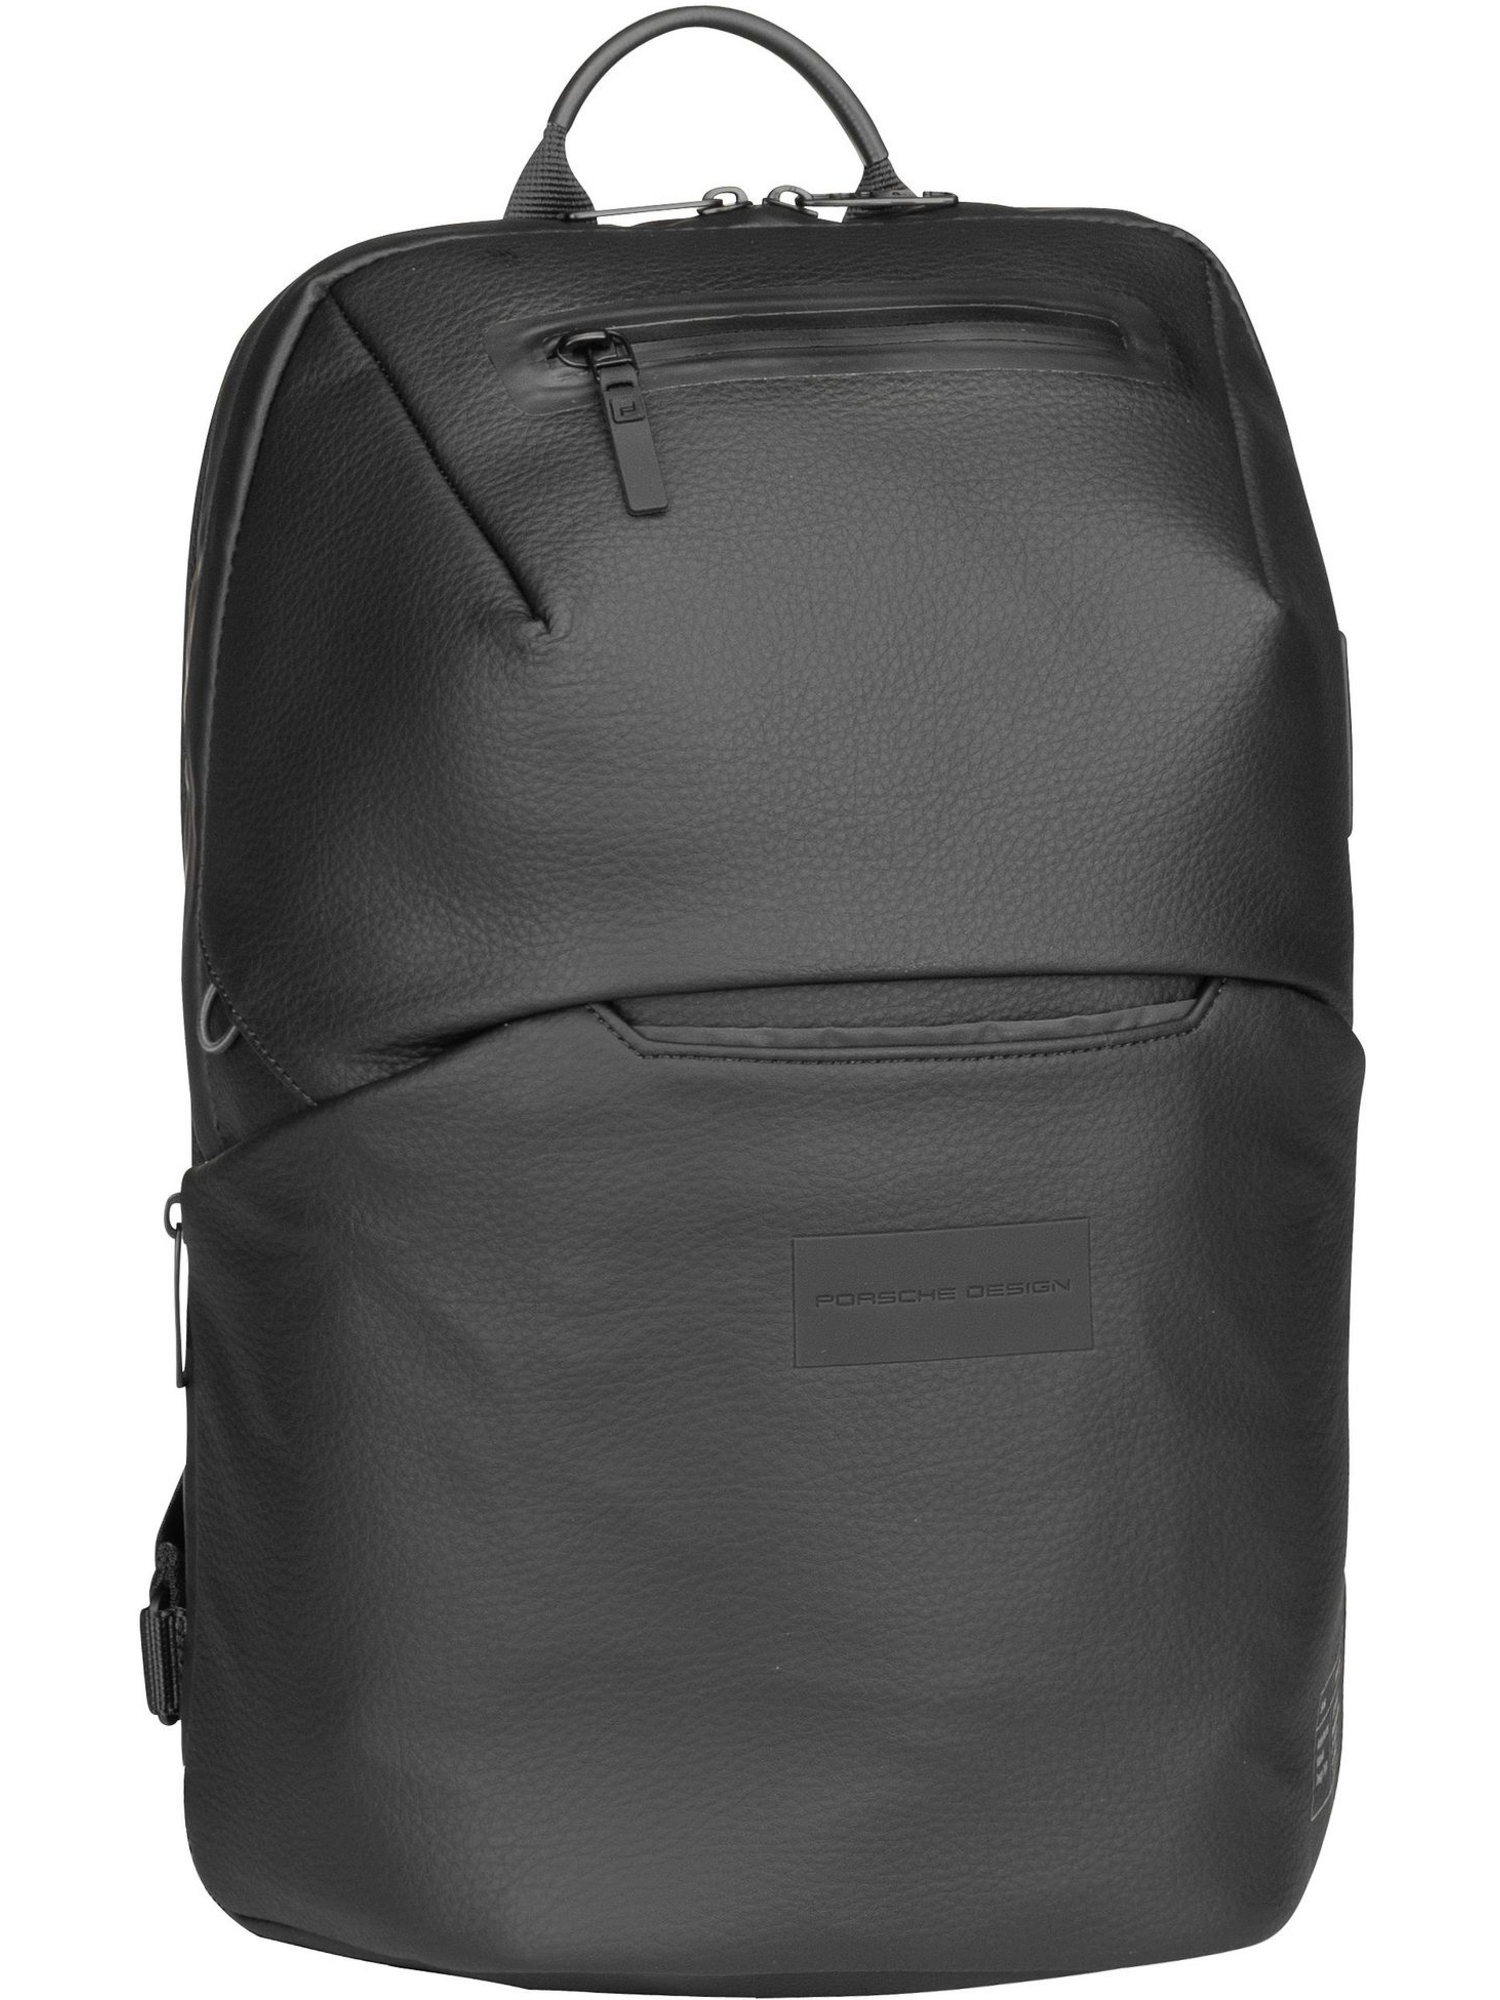 рюкзак urban porsche design цвет black Рюкзак Porsche Design/Backpack Urban Eco Leather Backpack XS, черный